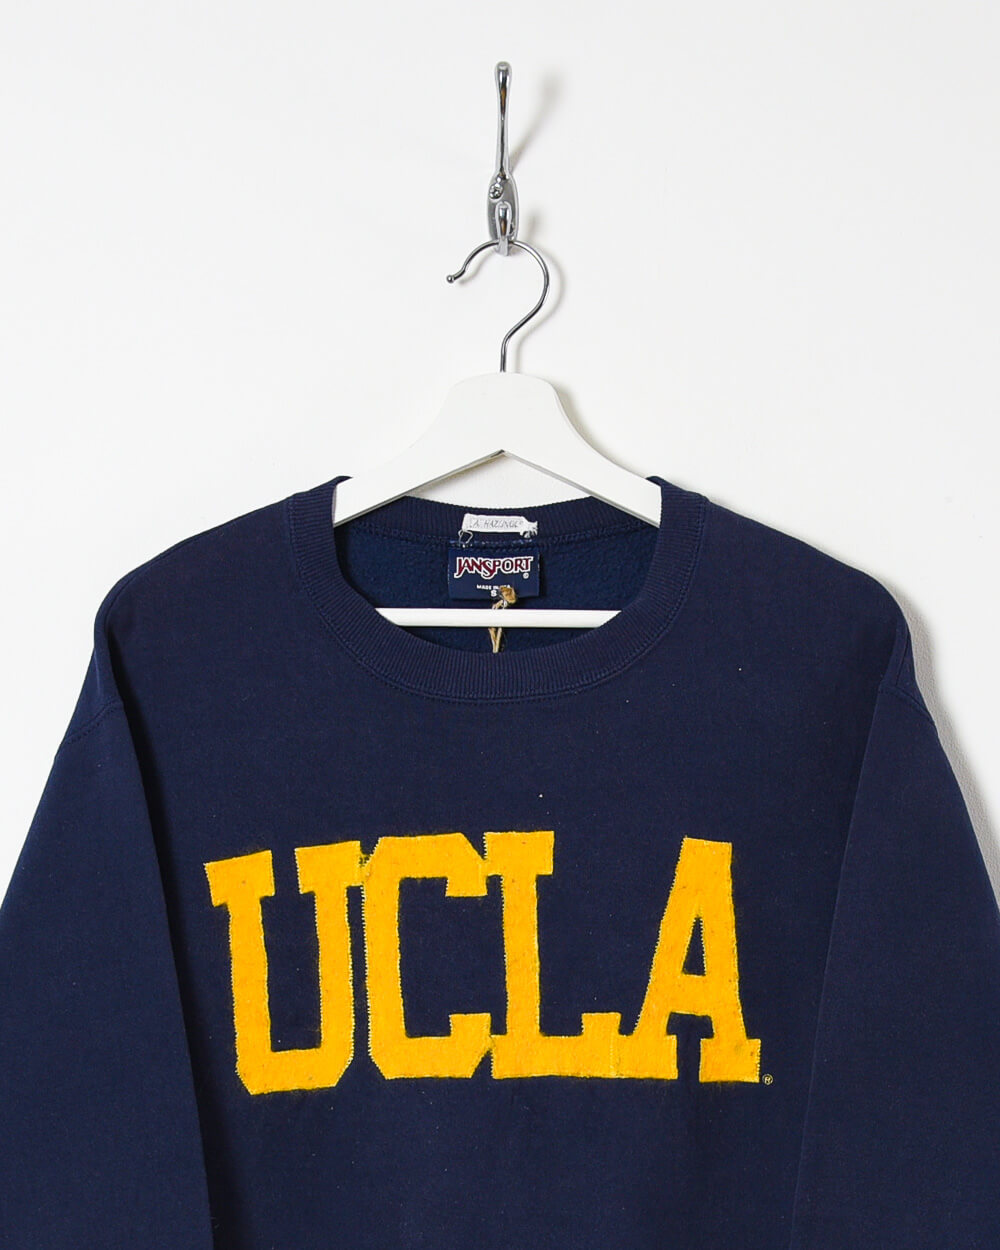 Jansport UCLA Sweatshirt - Small - Domno Vintage 90s, 80s, 00s Retro and Vintage Clothing 